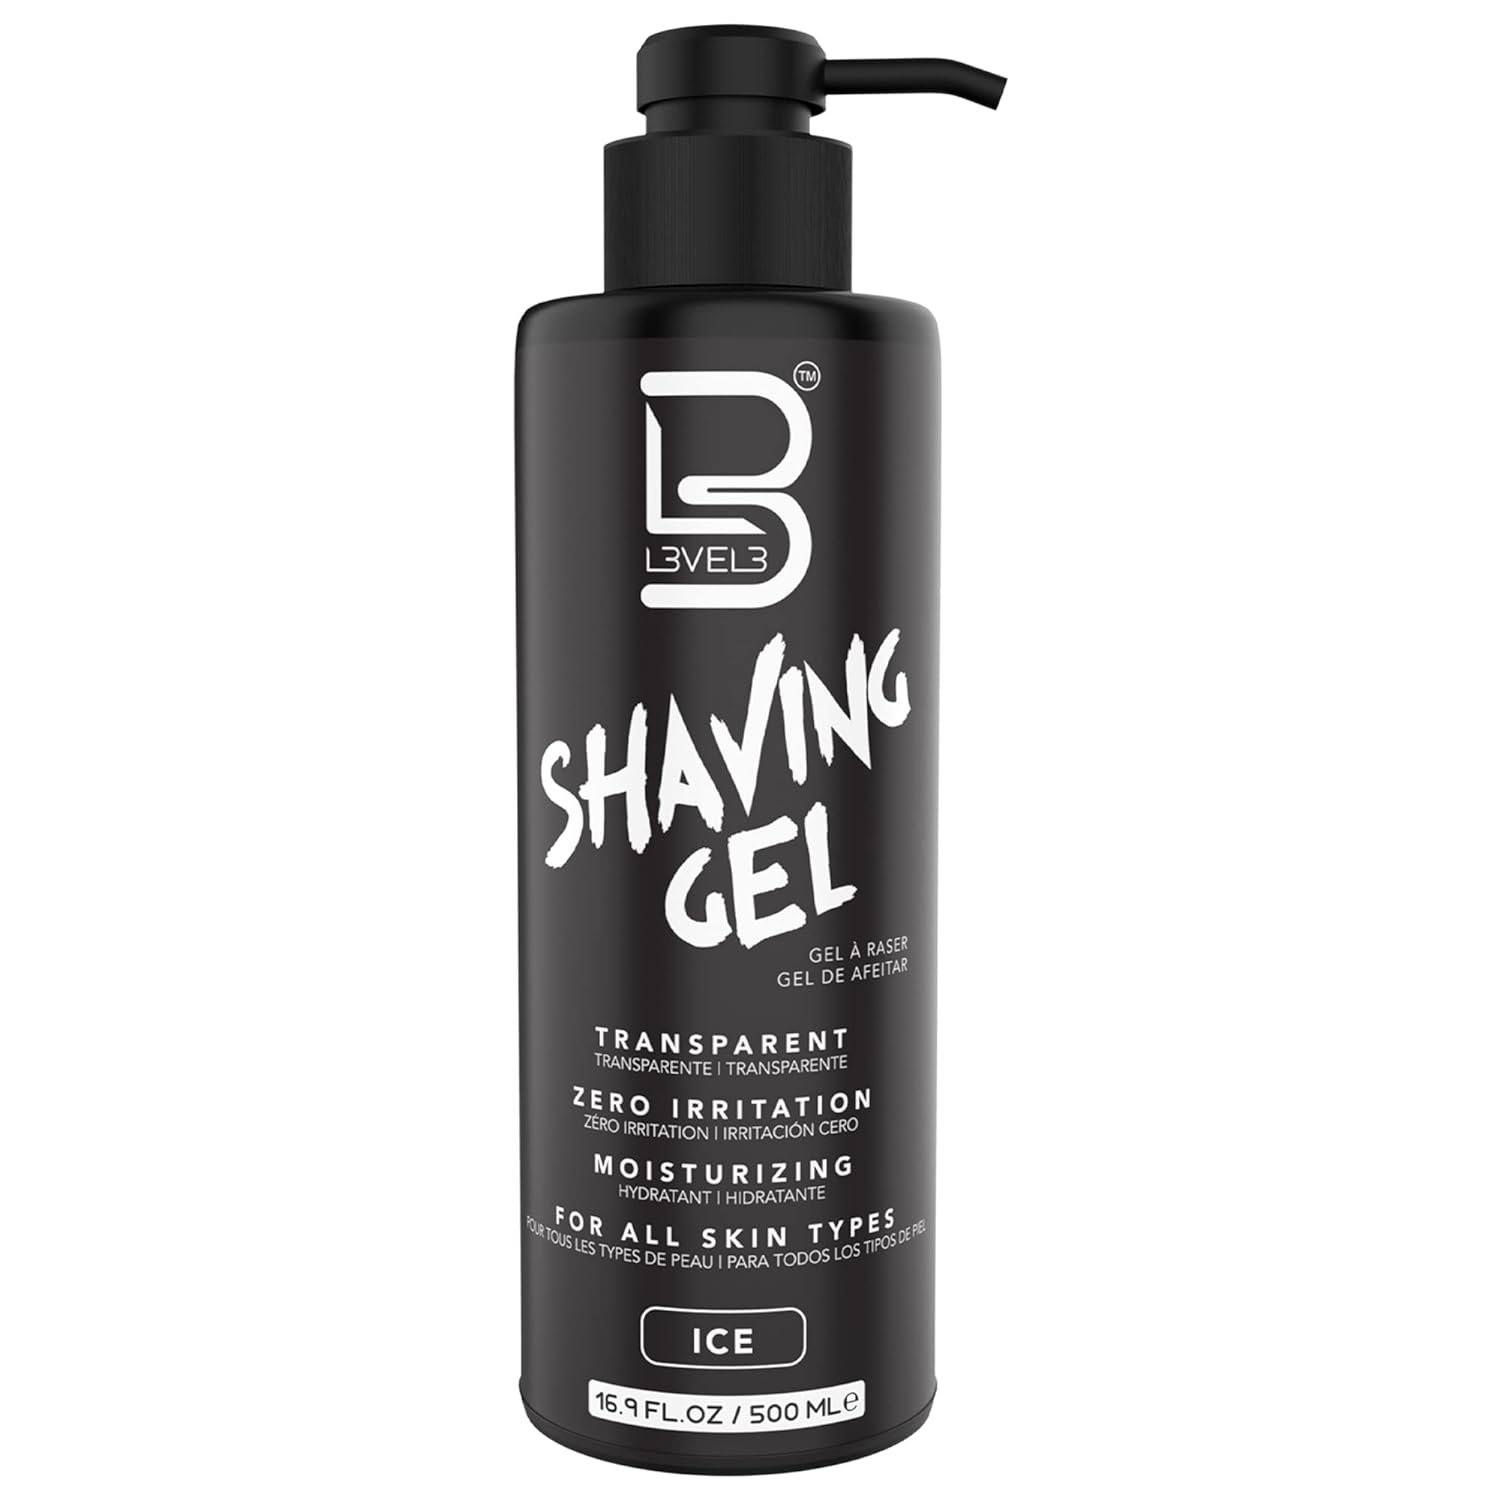  Level 3 Shaving Gel - Straight Razor Shave Gel